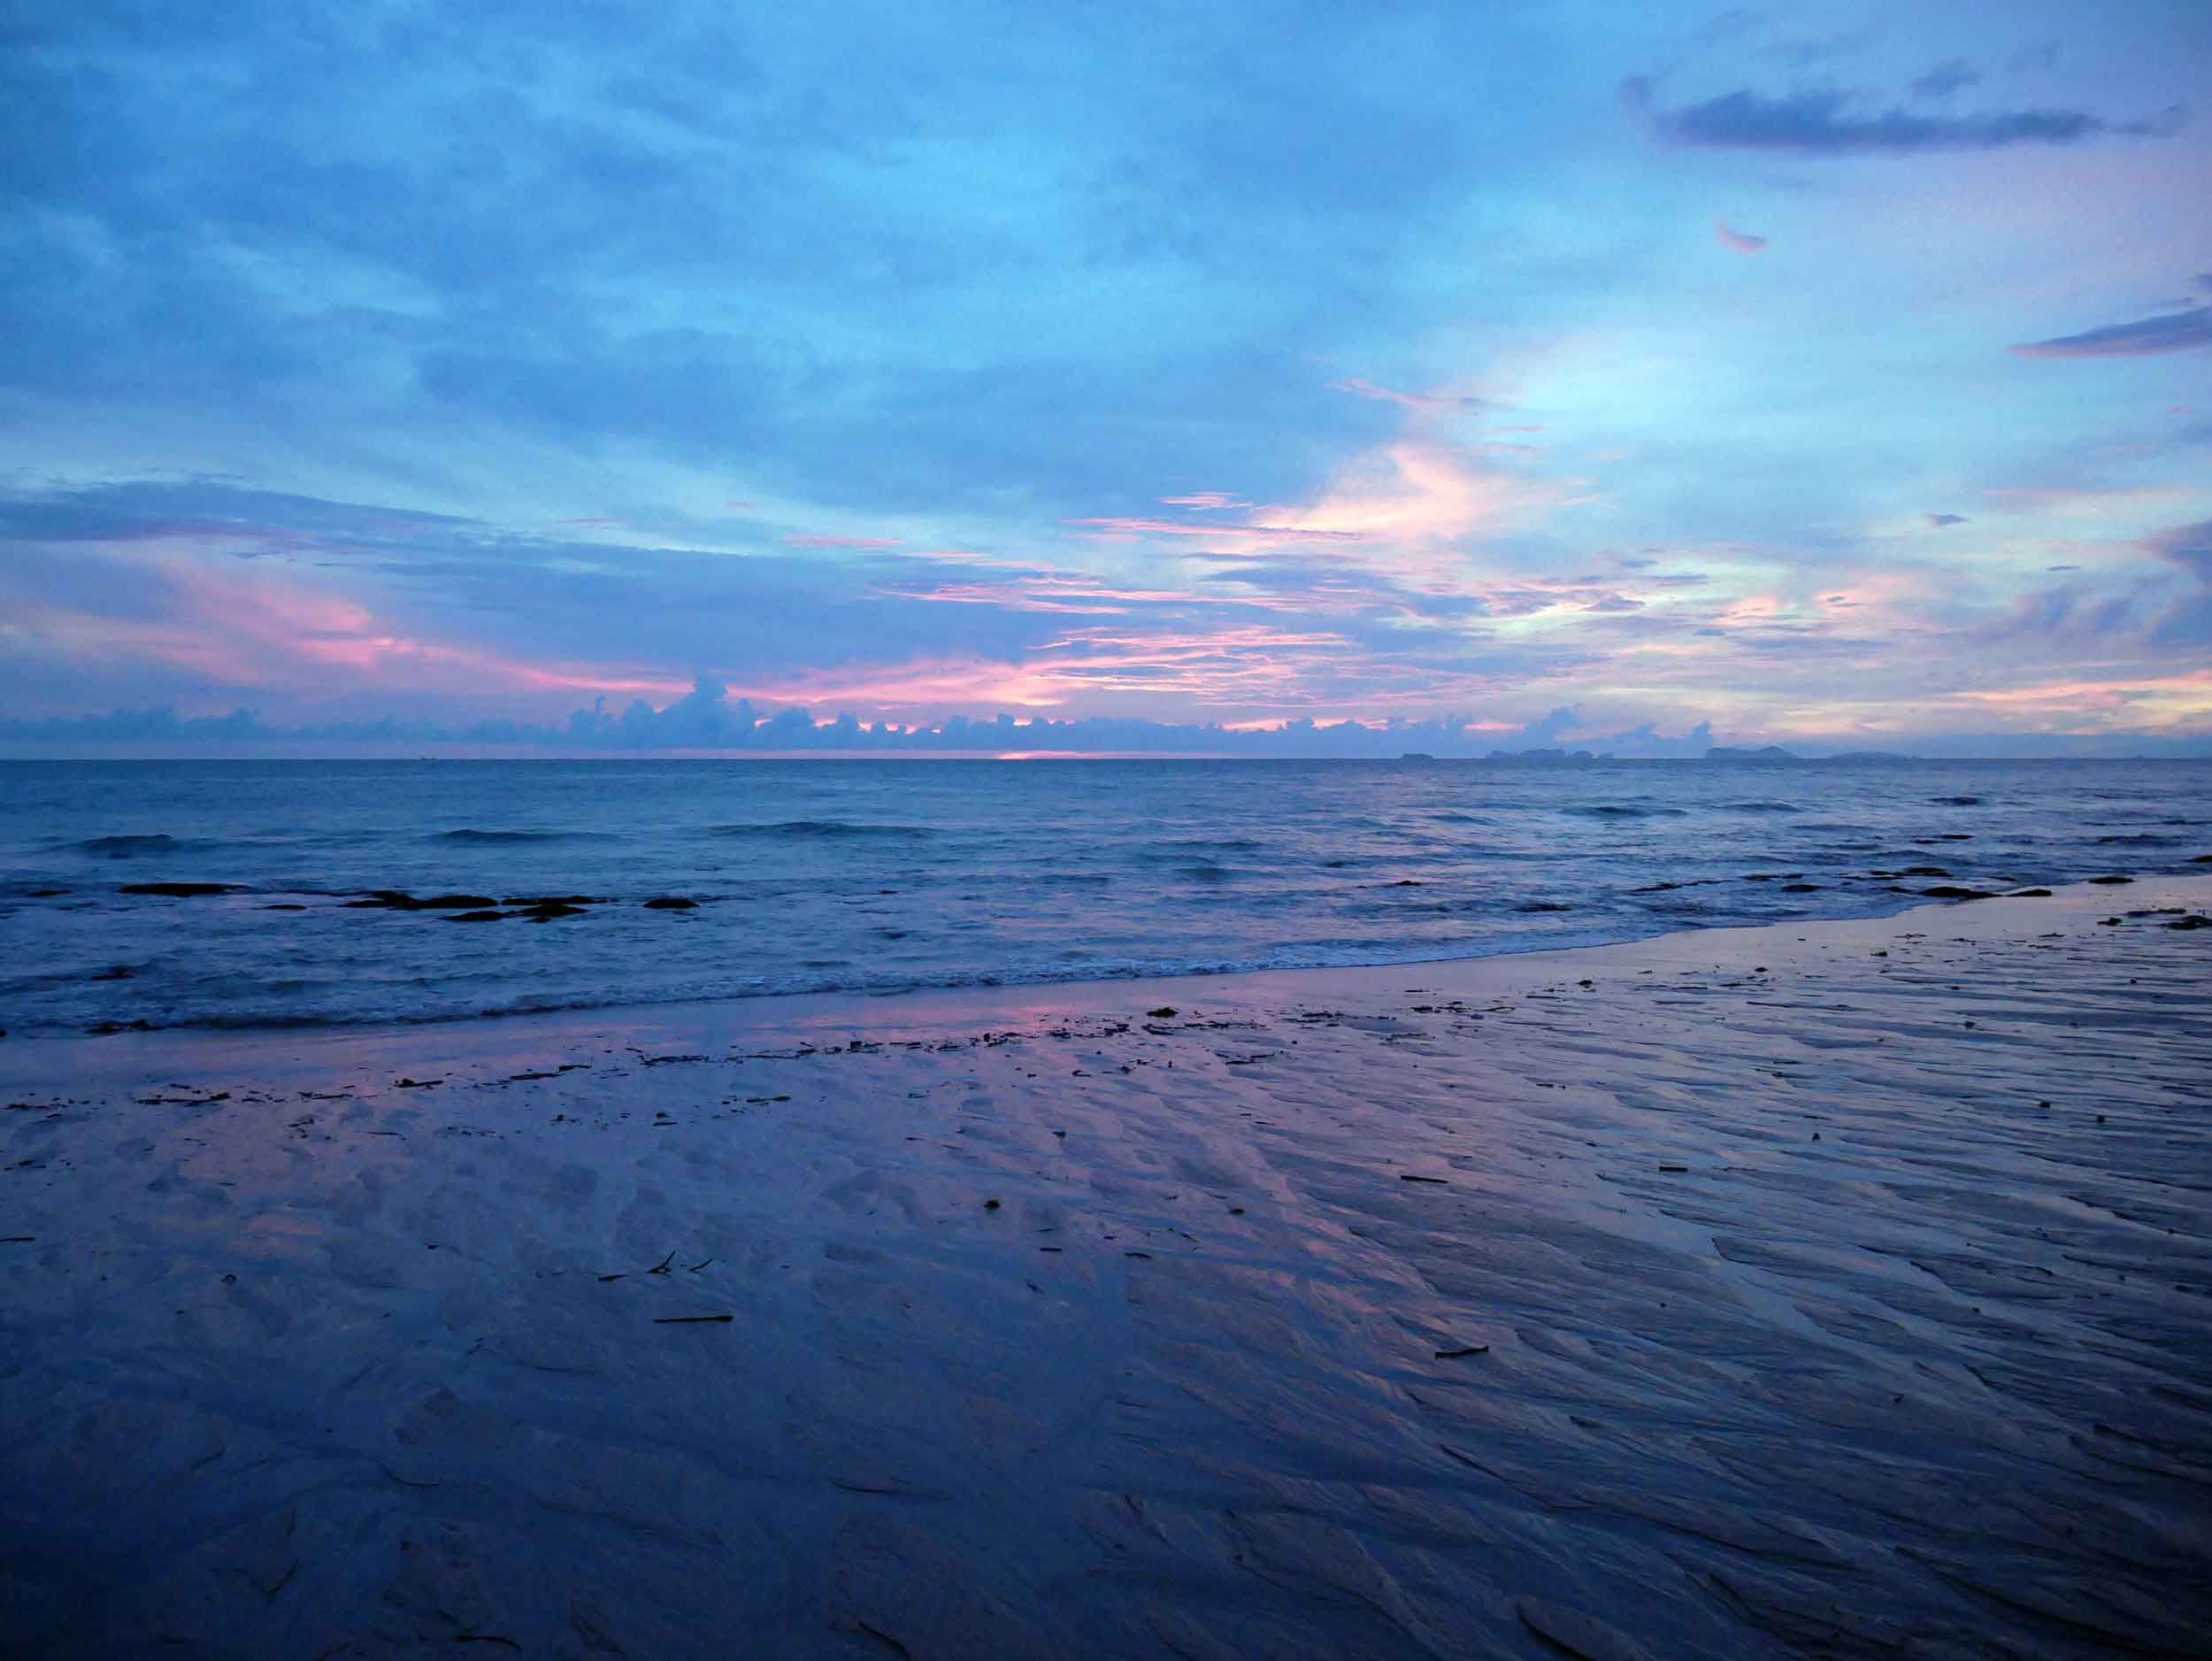  Koh Lanta's Klong Nin beach offered dramatic, stunning sunsets nearly every night we were on the island.&nbsp; 